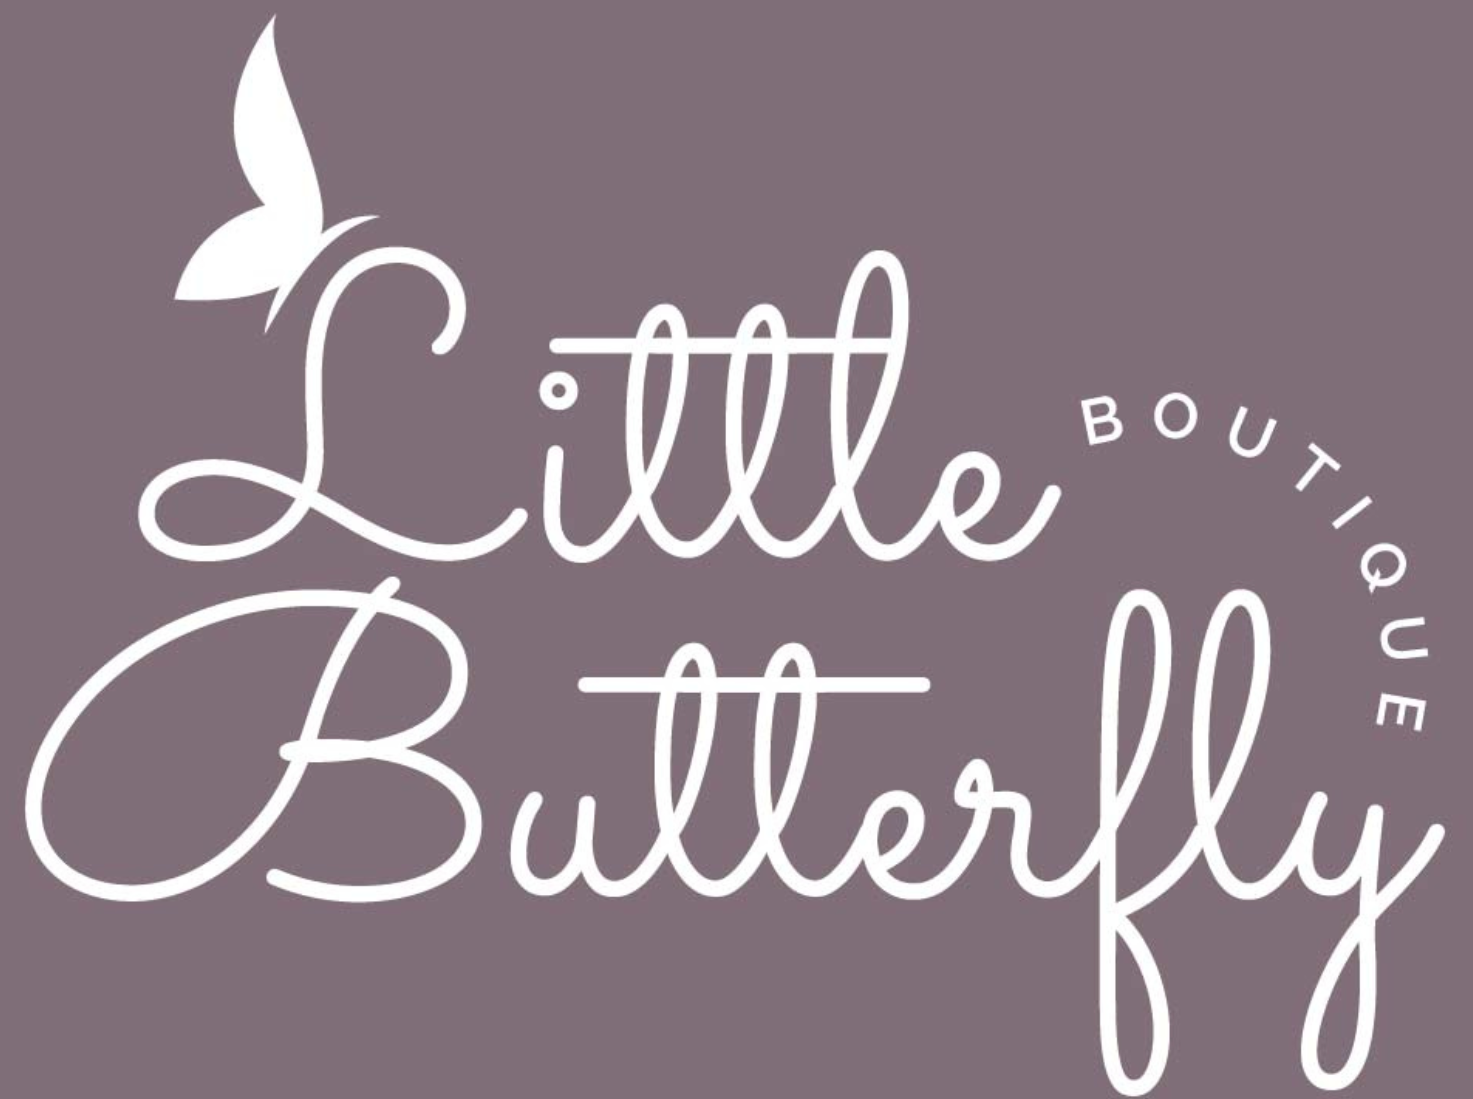 Little Butterfly Boutique